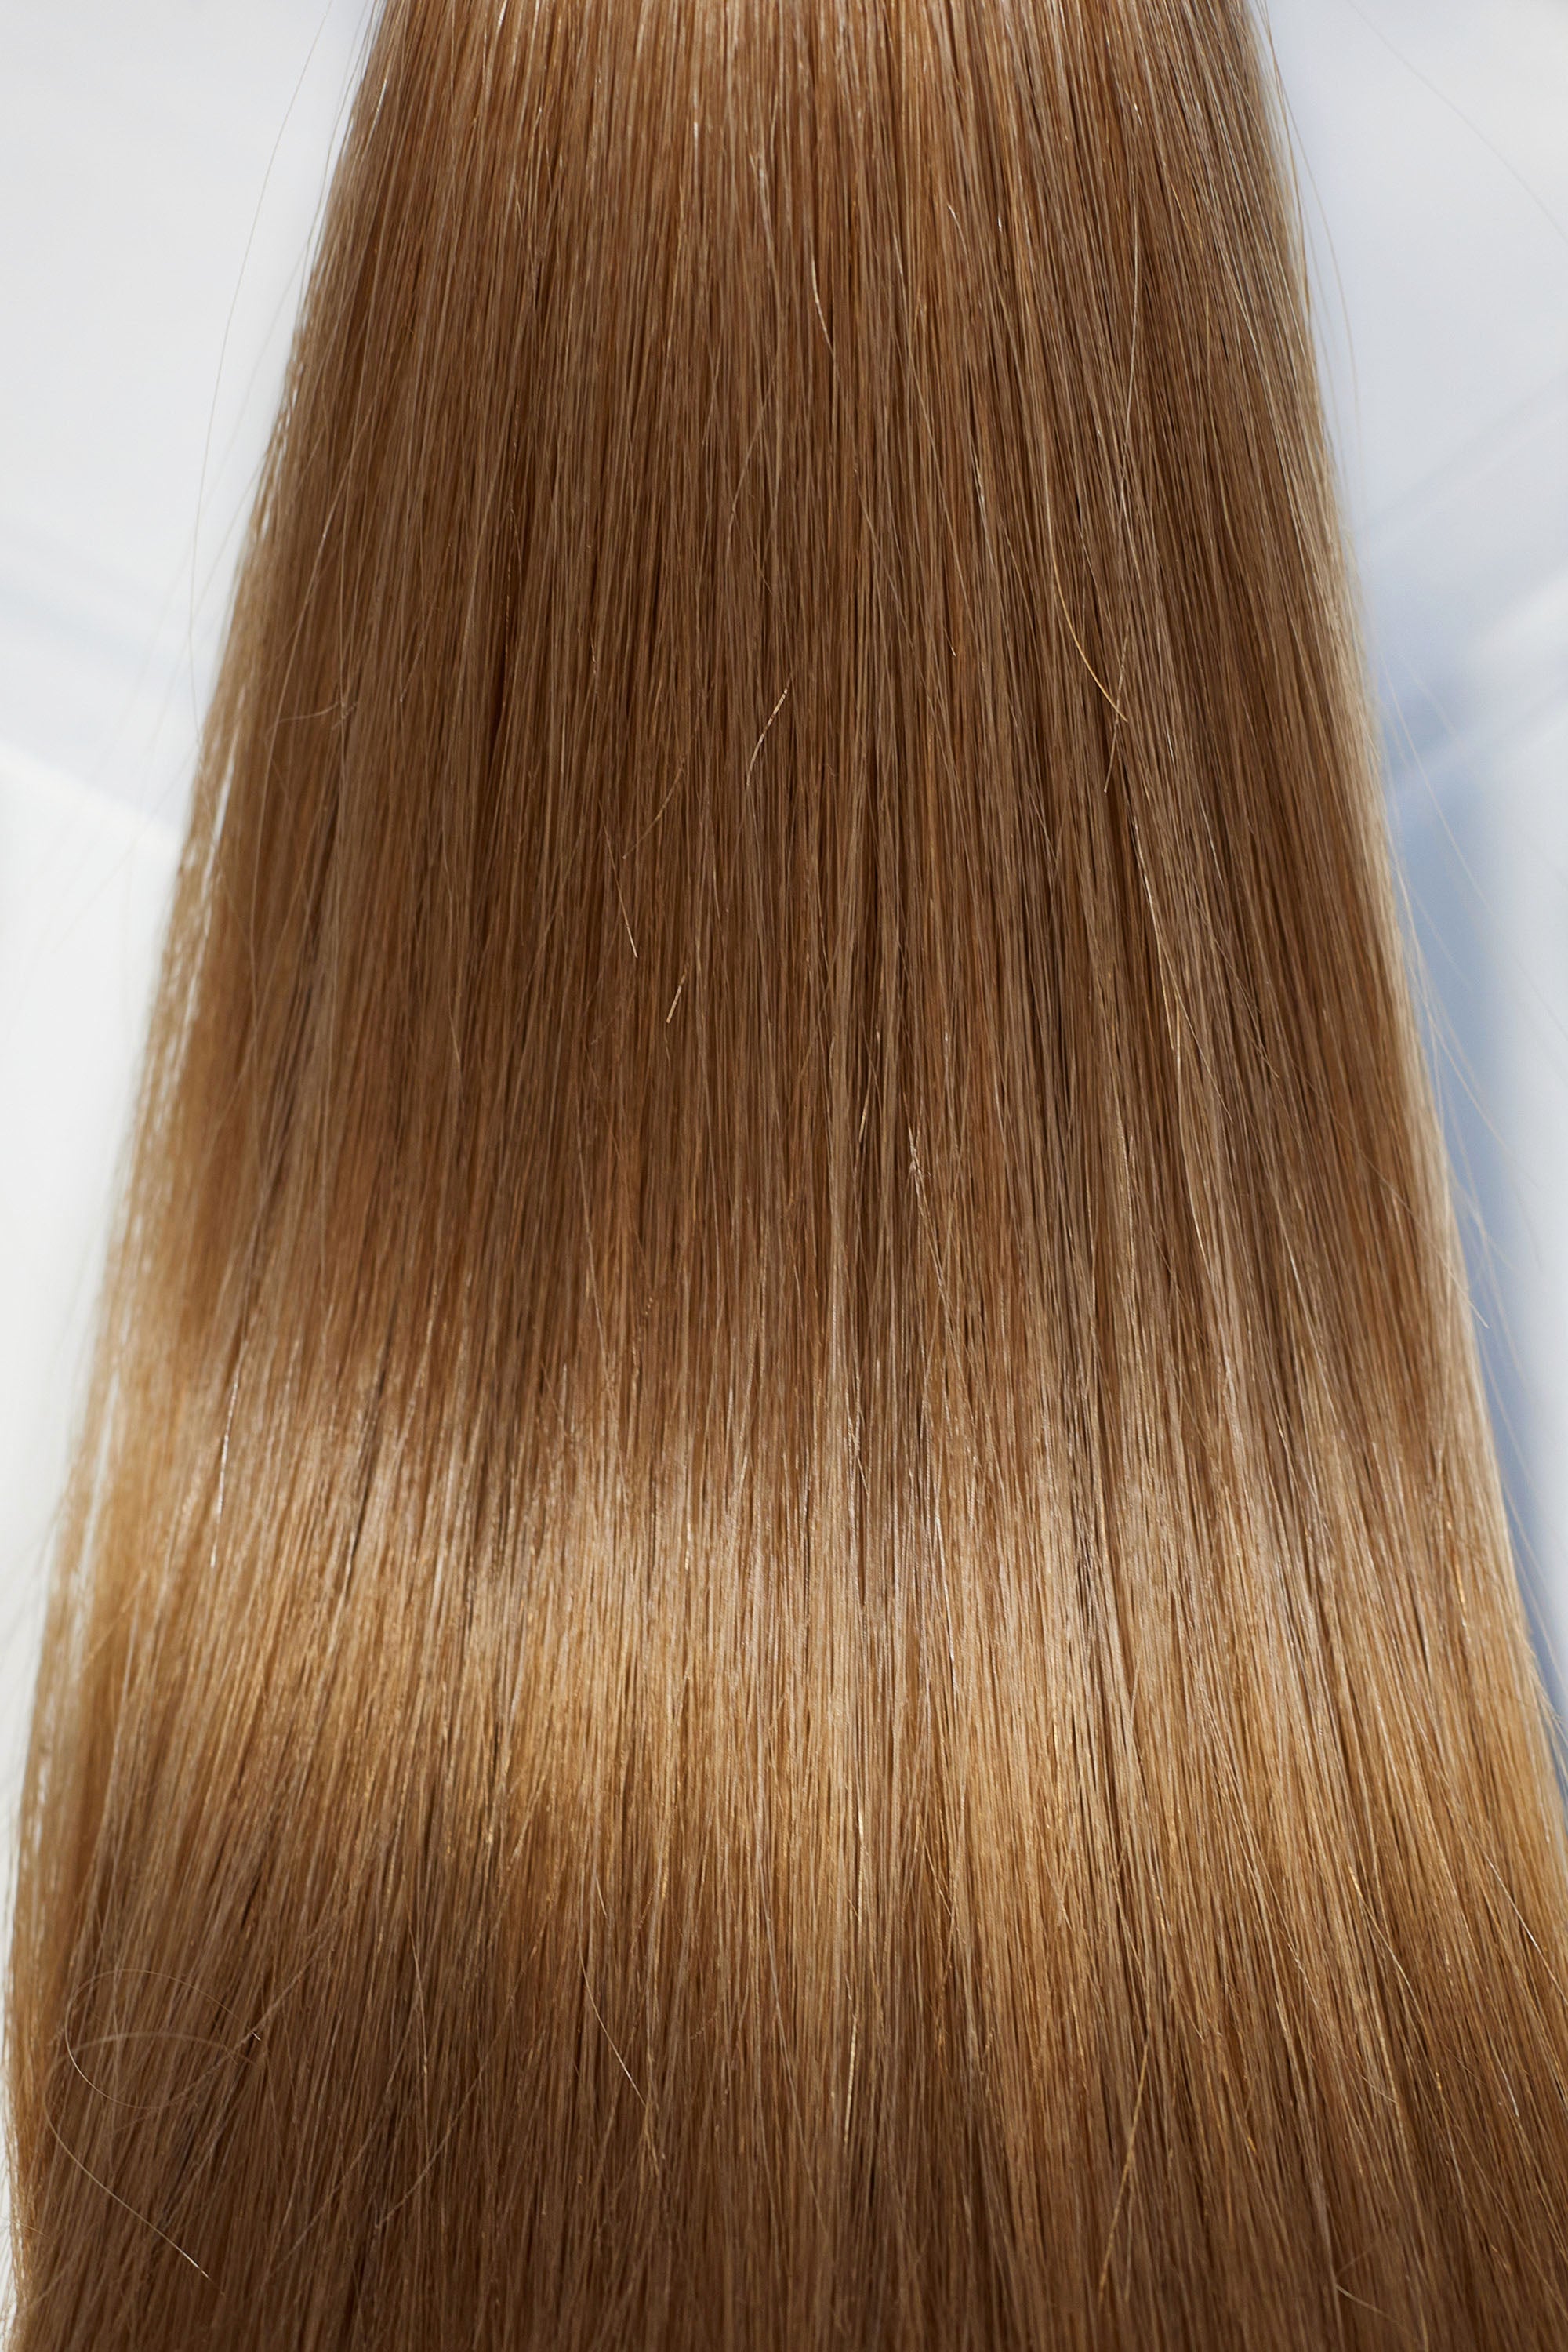 Behair professional Keratin Tip "Premium" 18" (45cm) Natural Straight Caramel Brown #8 - 25g (Micro - 0.5g each pcs) hair extensions